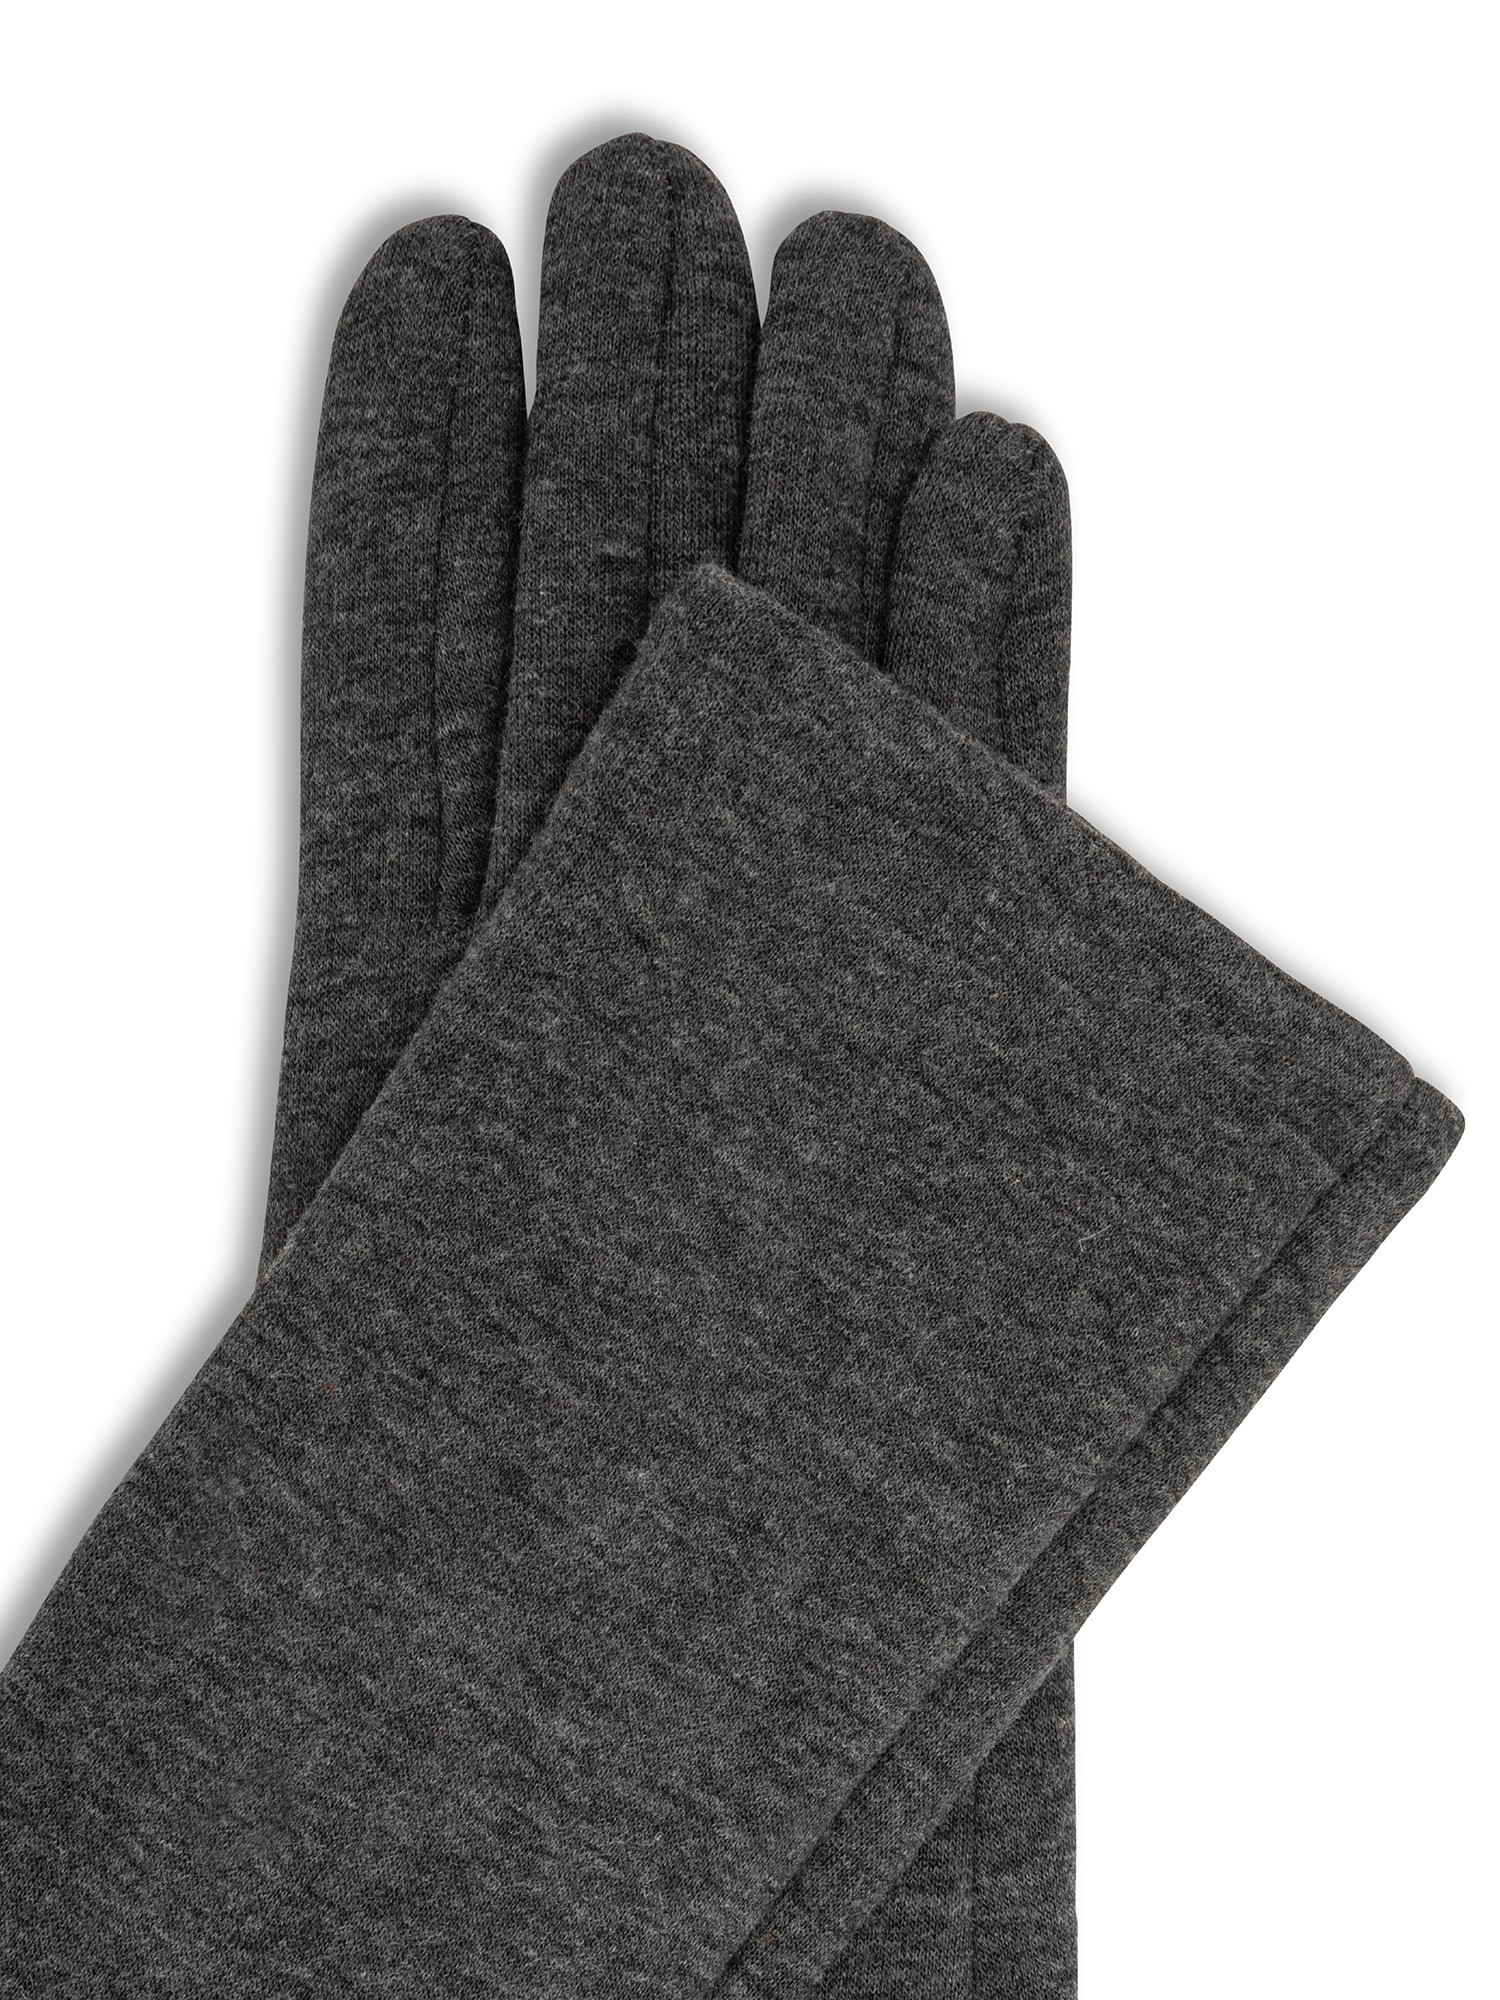 Koan - Jersey gloves, Grey, large image number 1